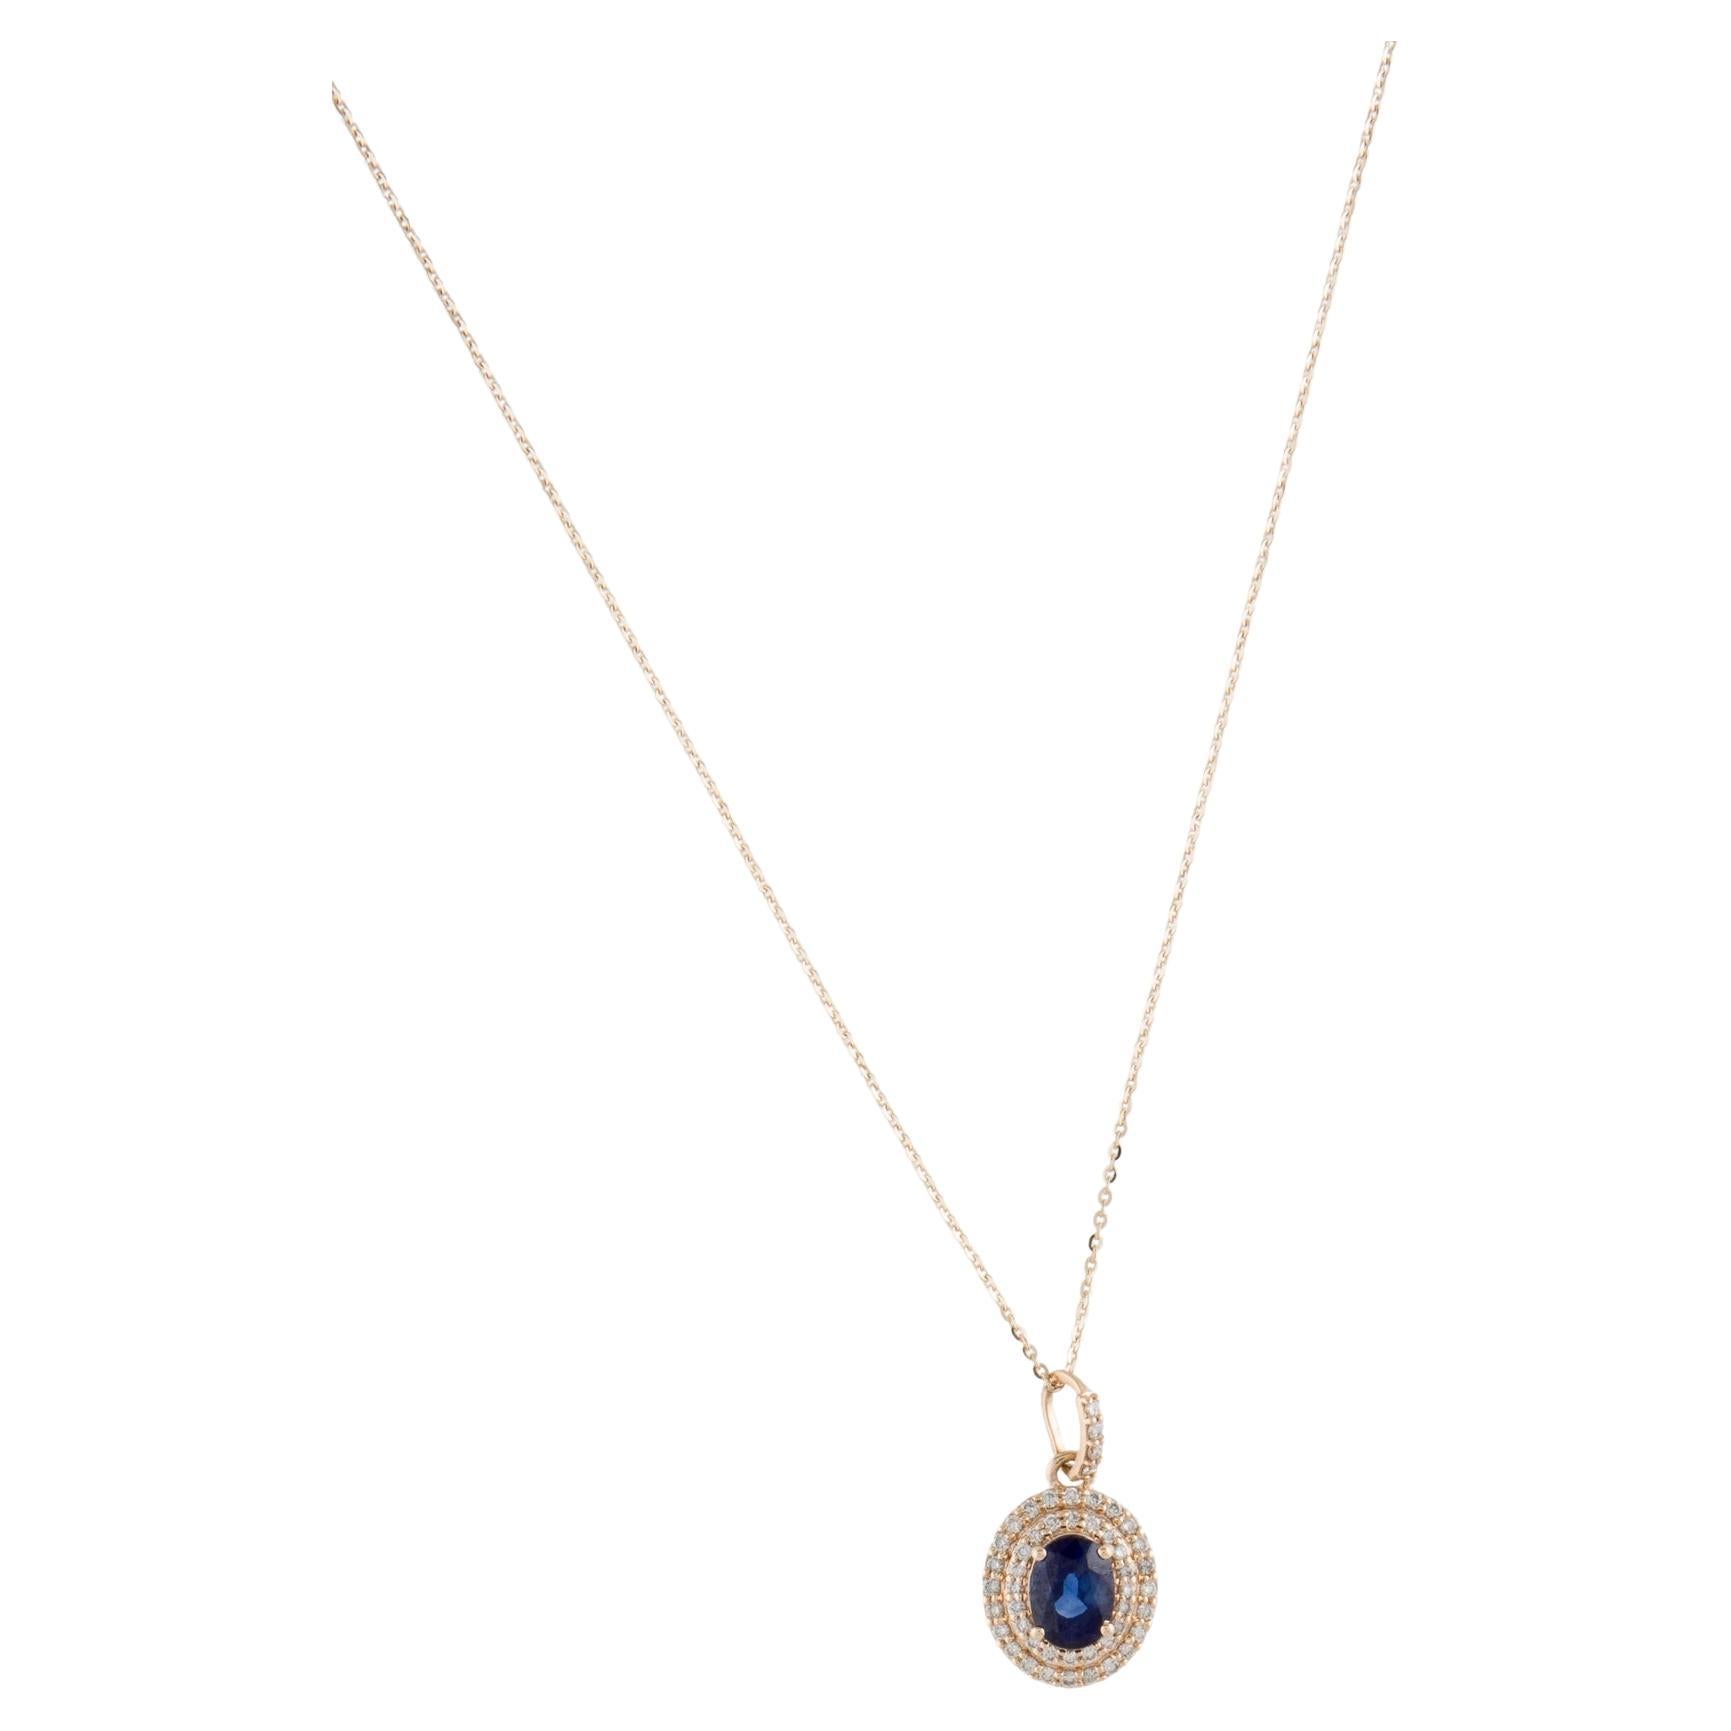 14K 1.43ct Sapphire & Diamond Pendant Necklace: Elegant Luxury Statement Jewelry For Sale